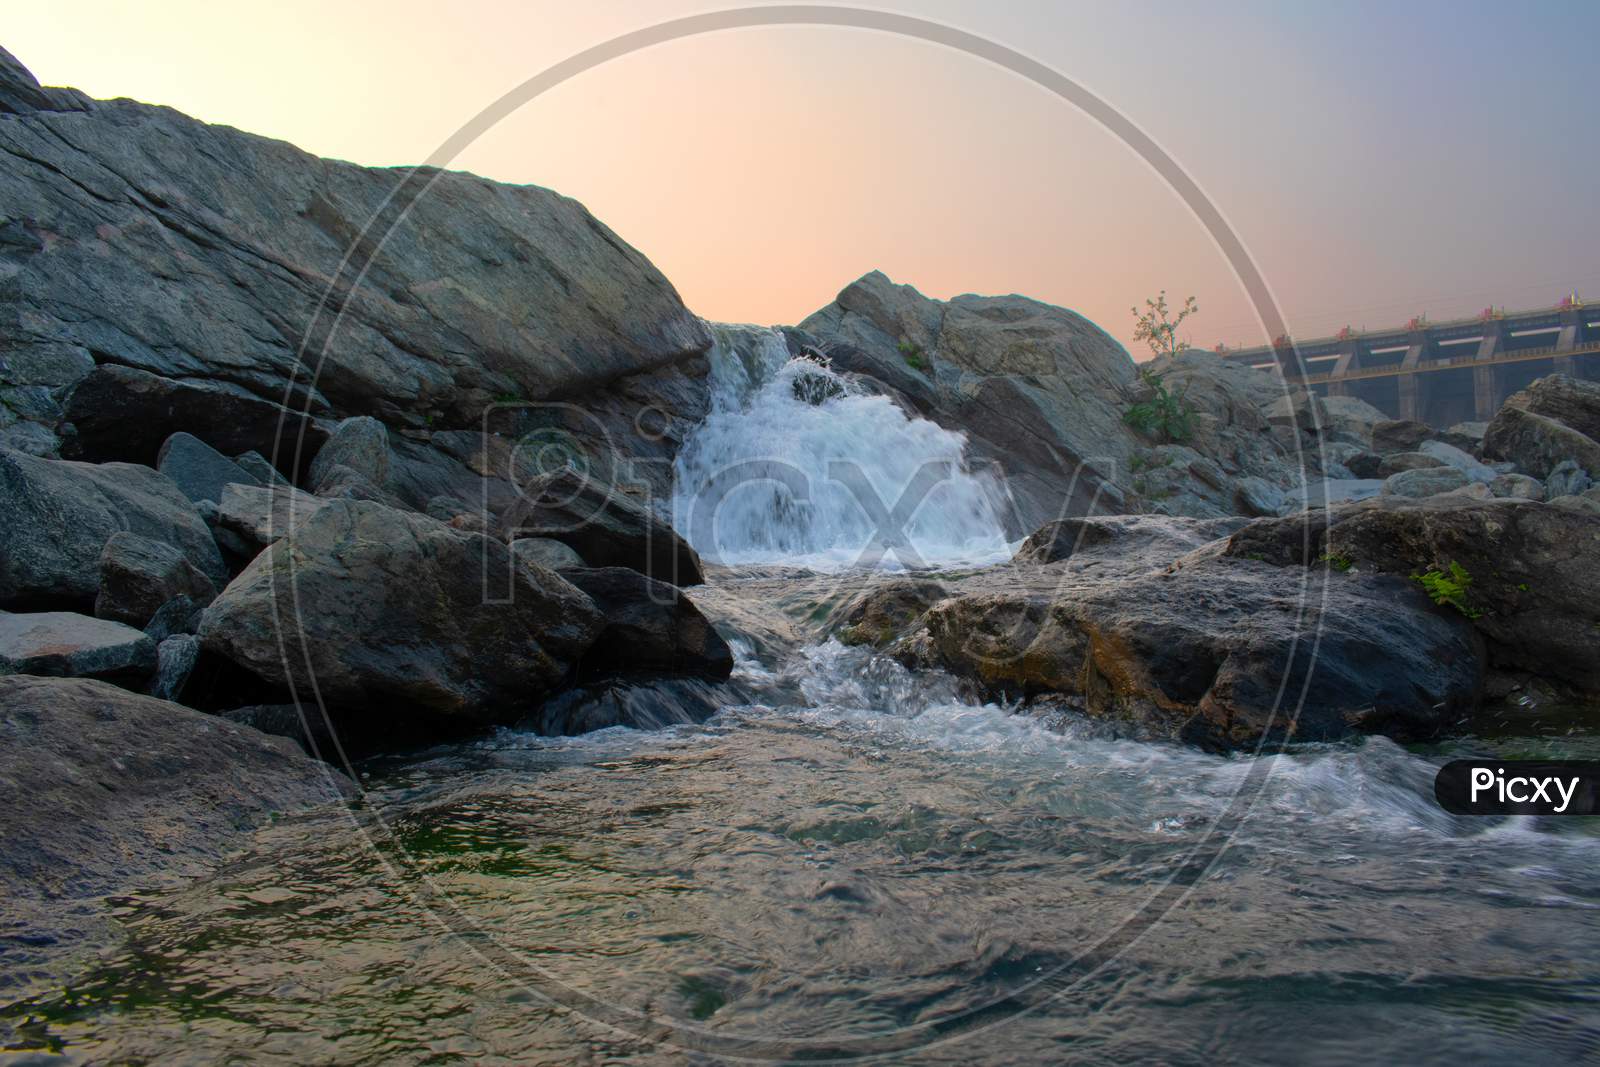 Closeup Image Of Water Flowing Between The Rocks